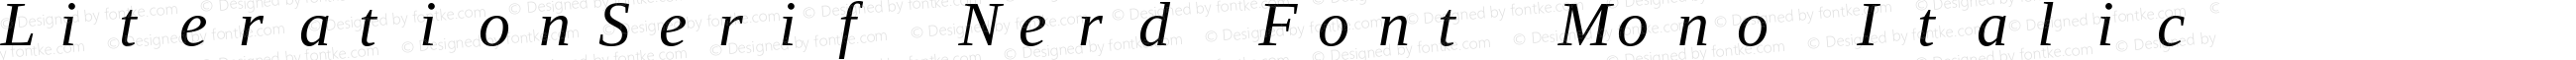 Literation Serif Italic Nerd Font Complete Mono